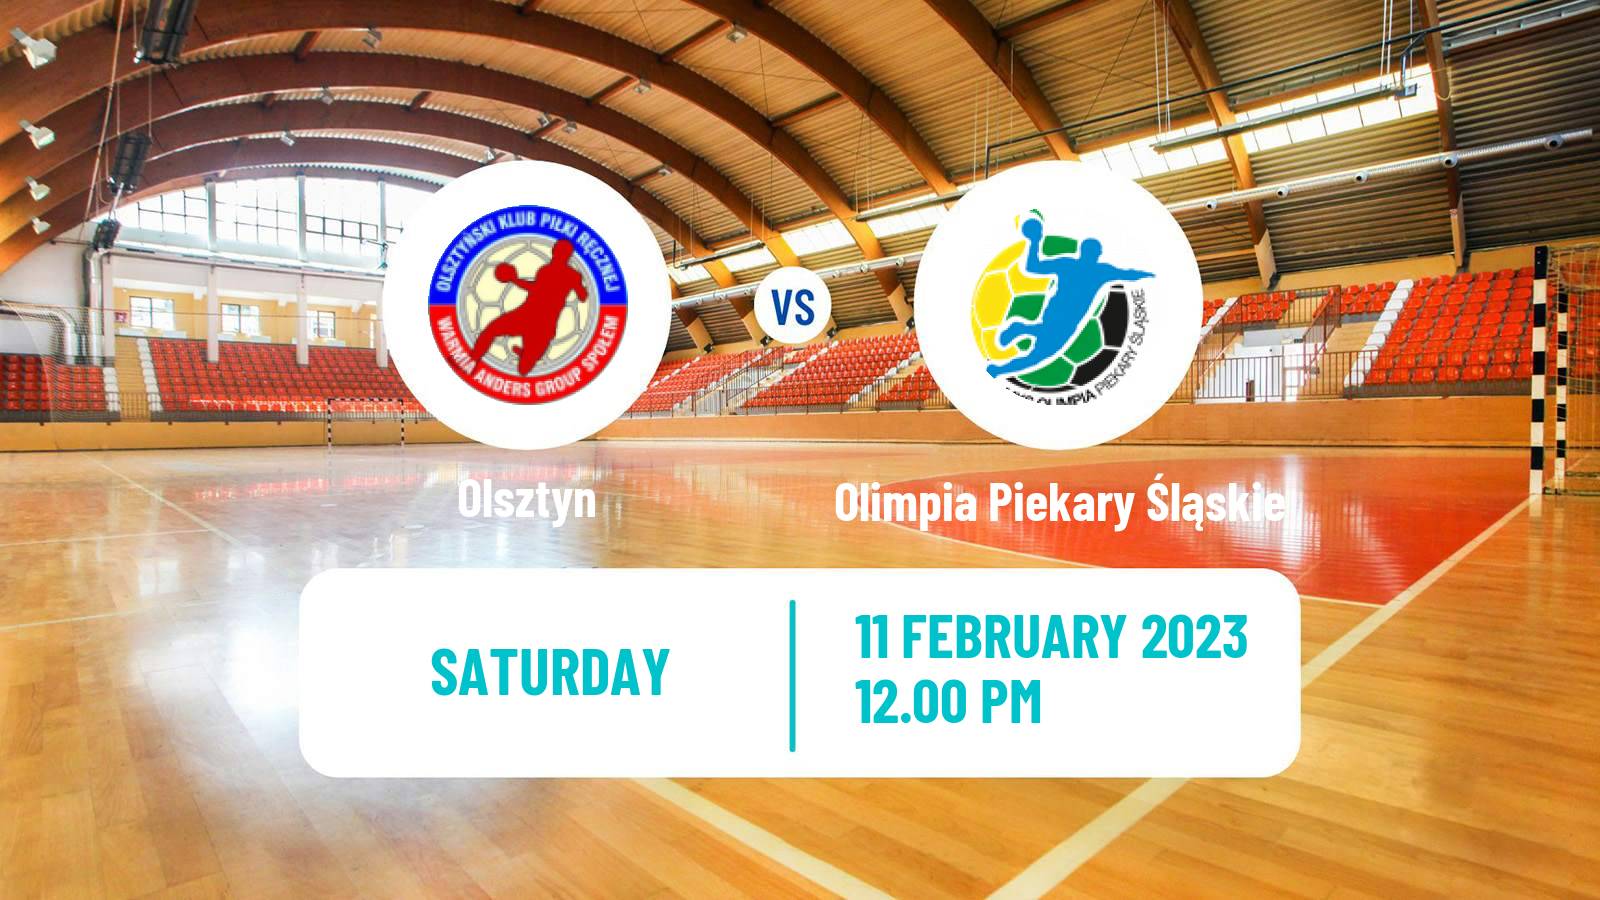 Handball Polish Central League Handball Olsztyn - Olimpia Piekary Śląskie